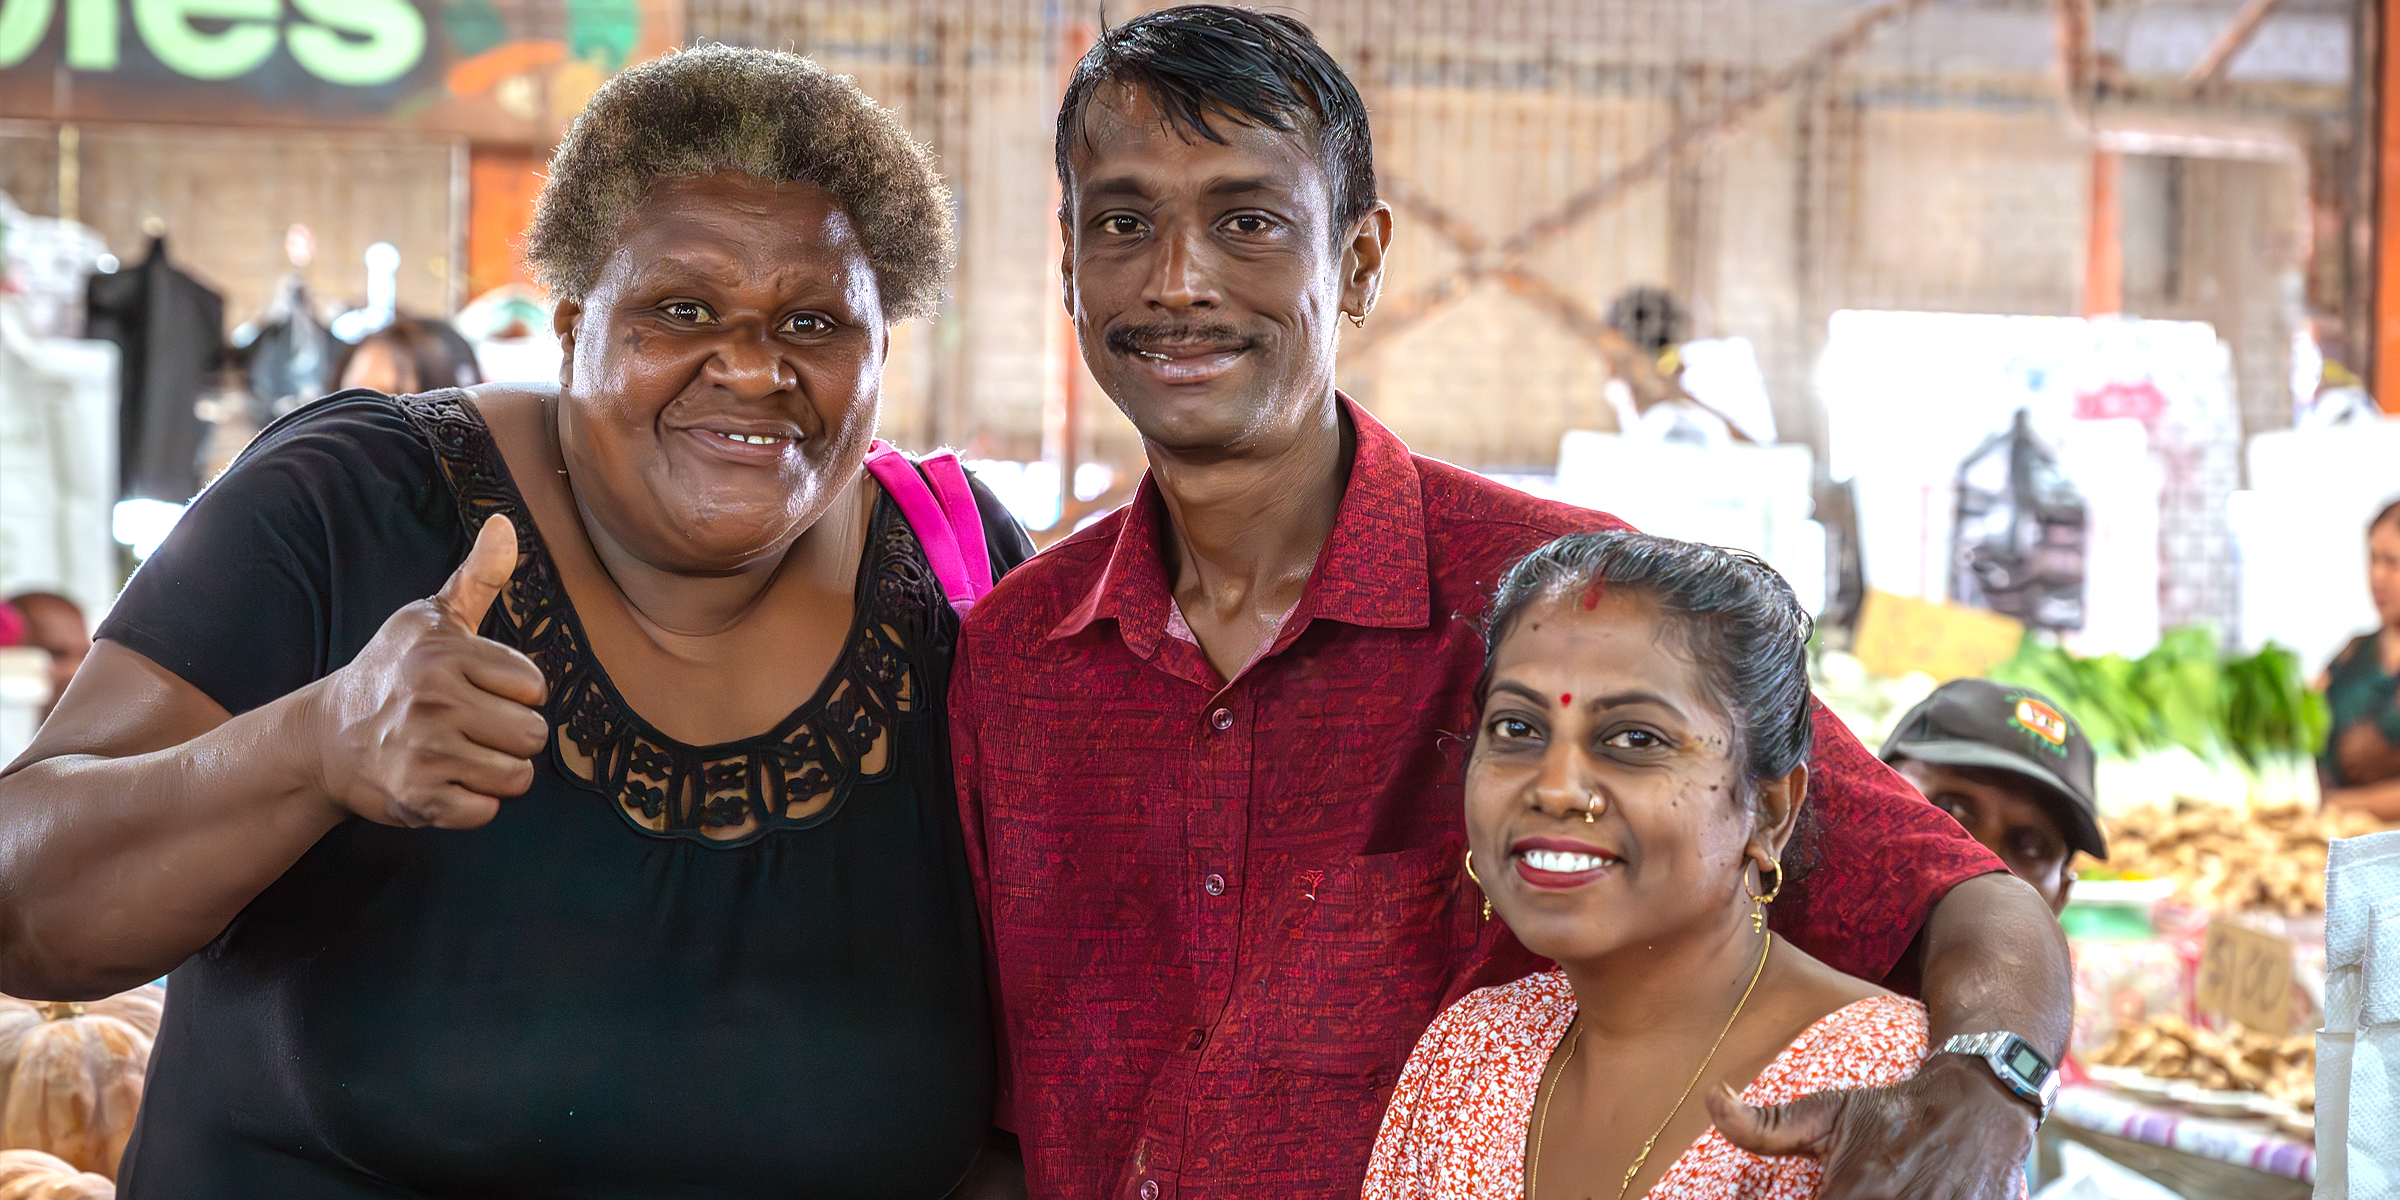 The people of Fiji. | Source: Shutterstock